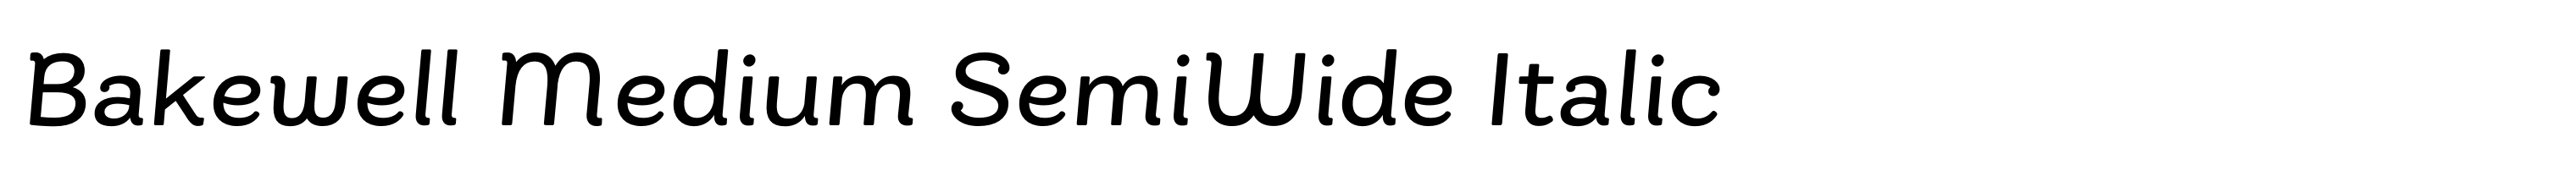 Bakewell Medium SemiWide Italic